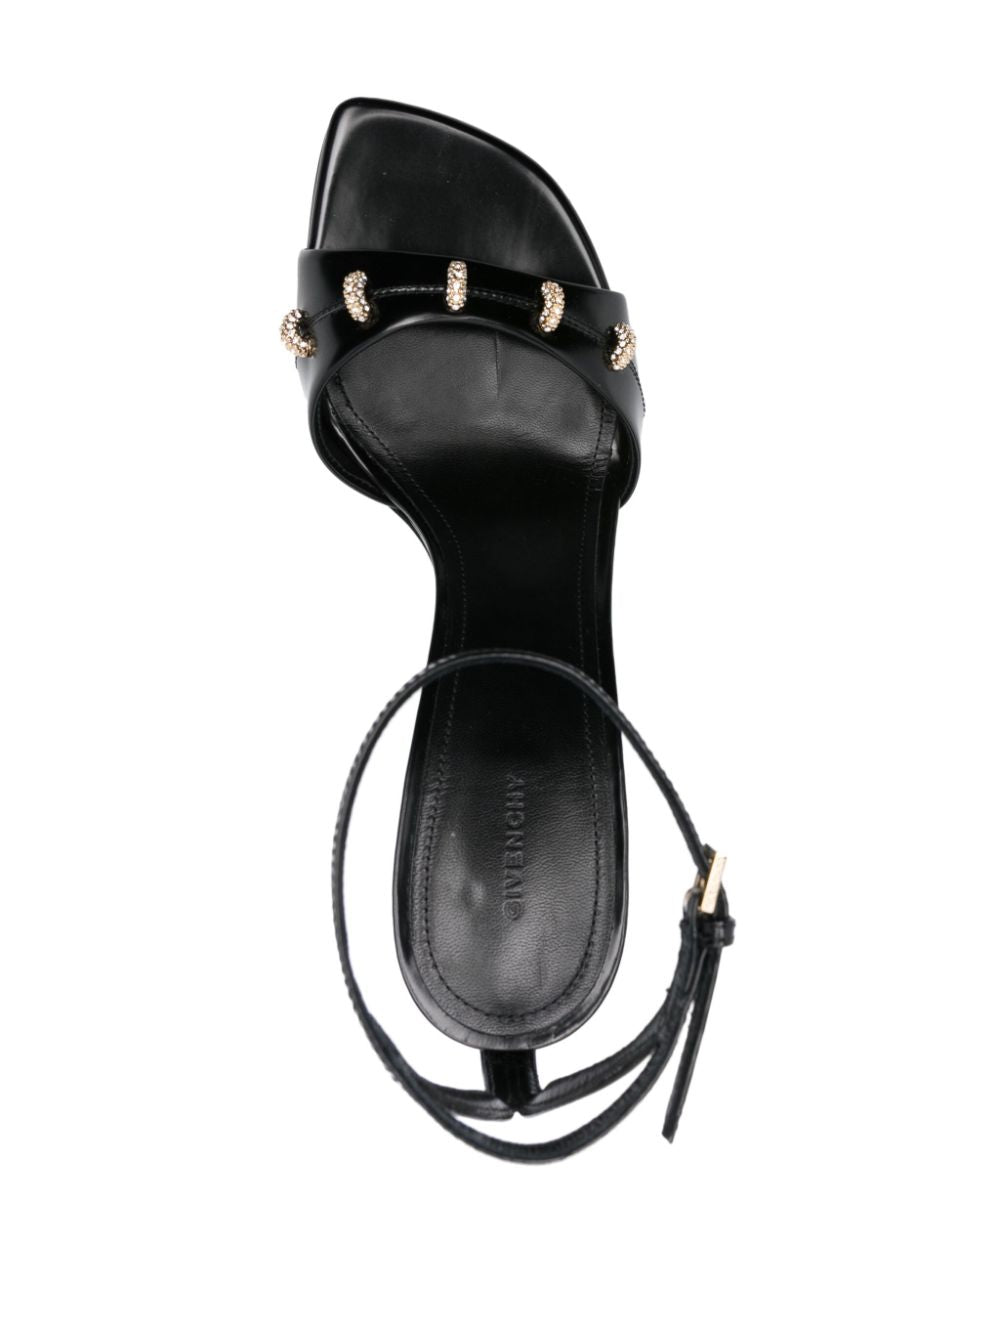 Givenchy Sandals Black